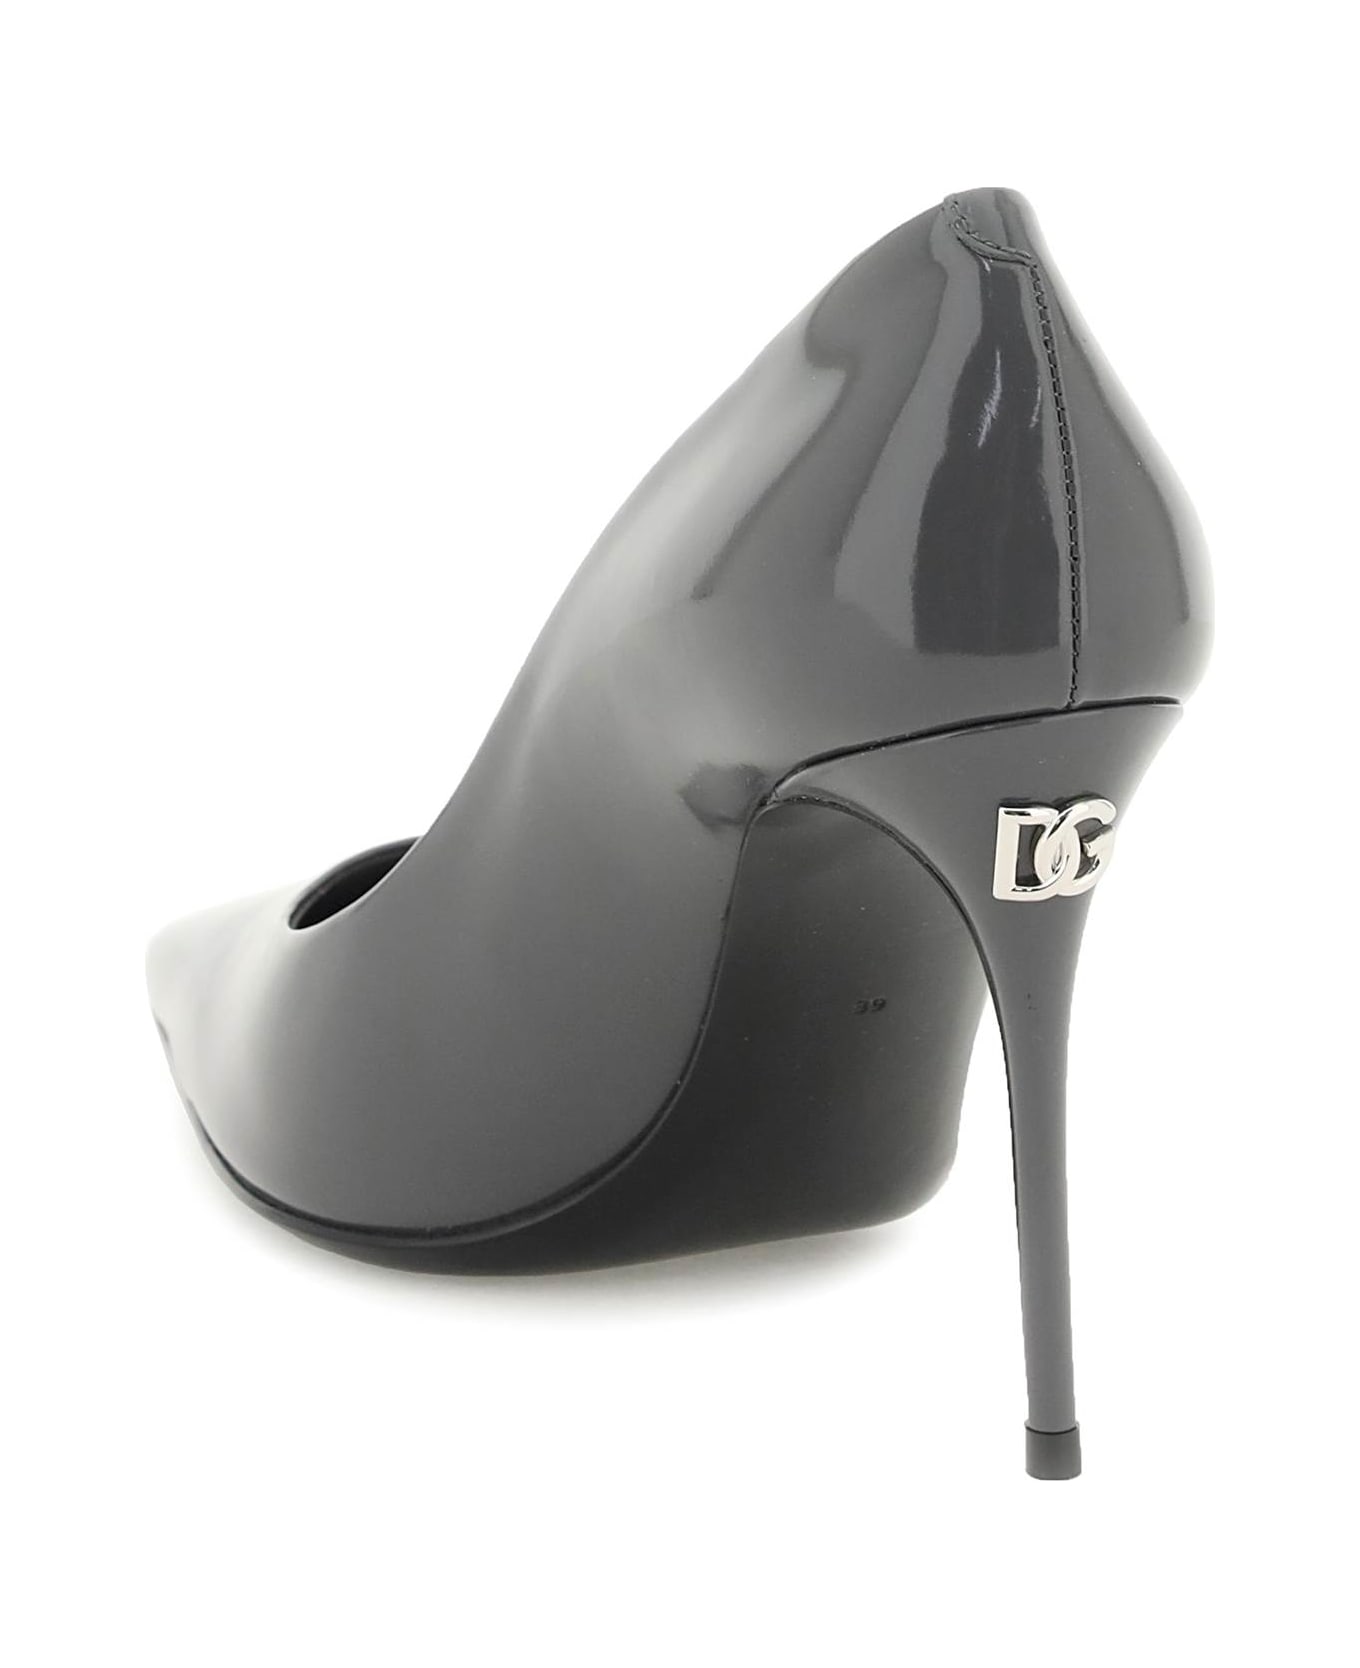 Dolce & Gabbana Patent Leather Pumps - Grey